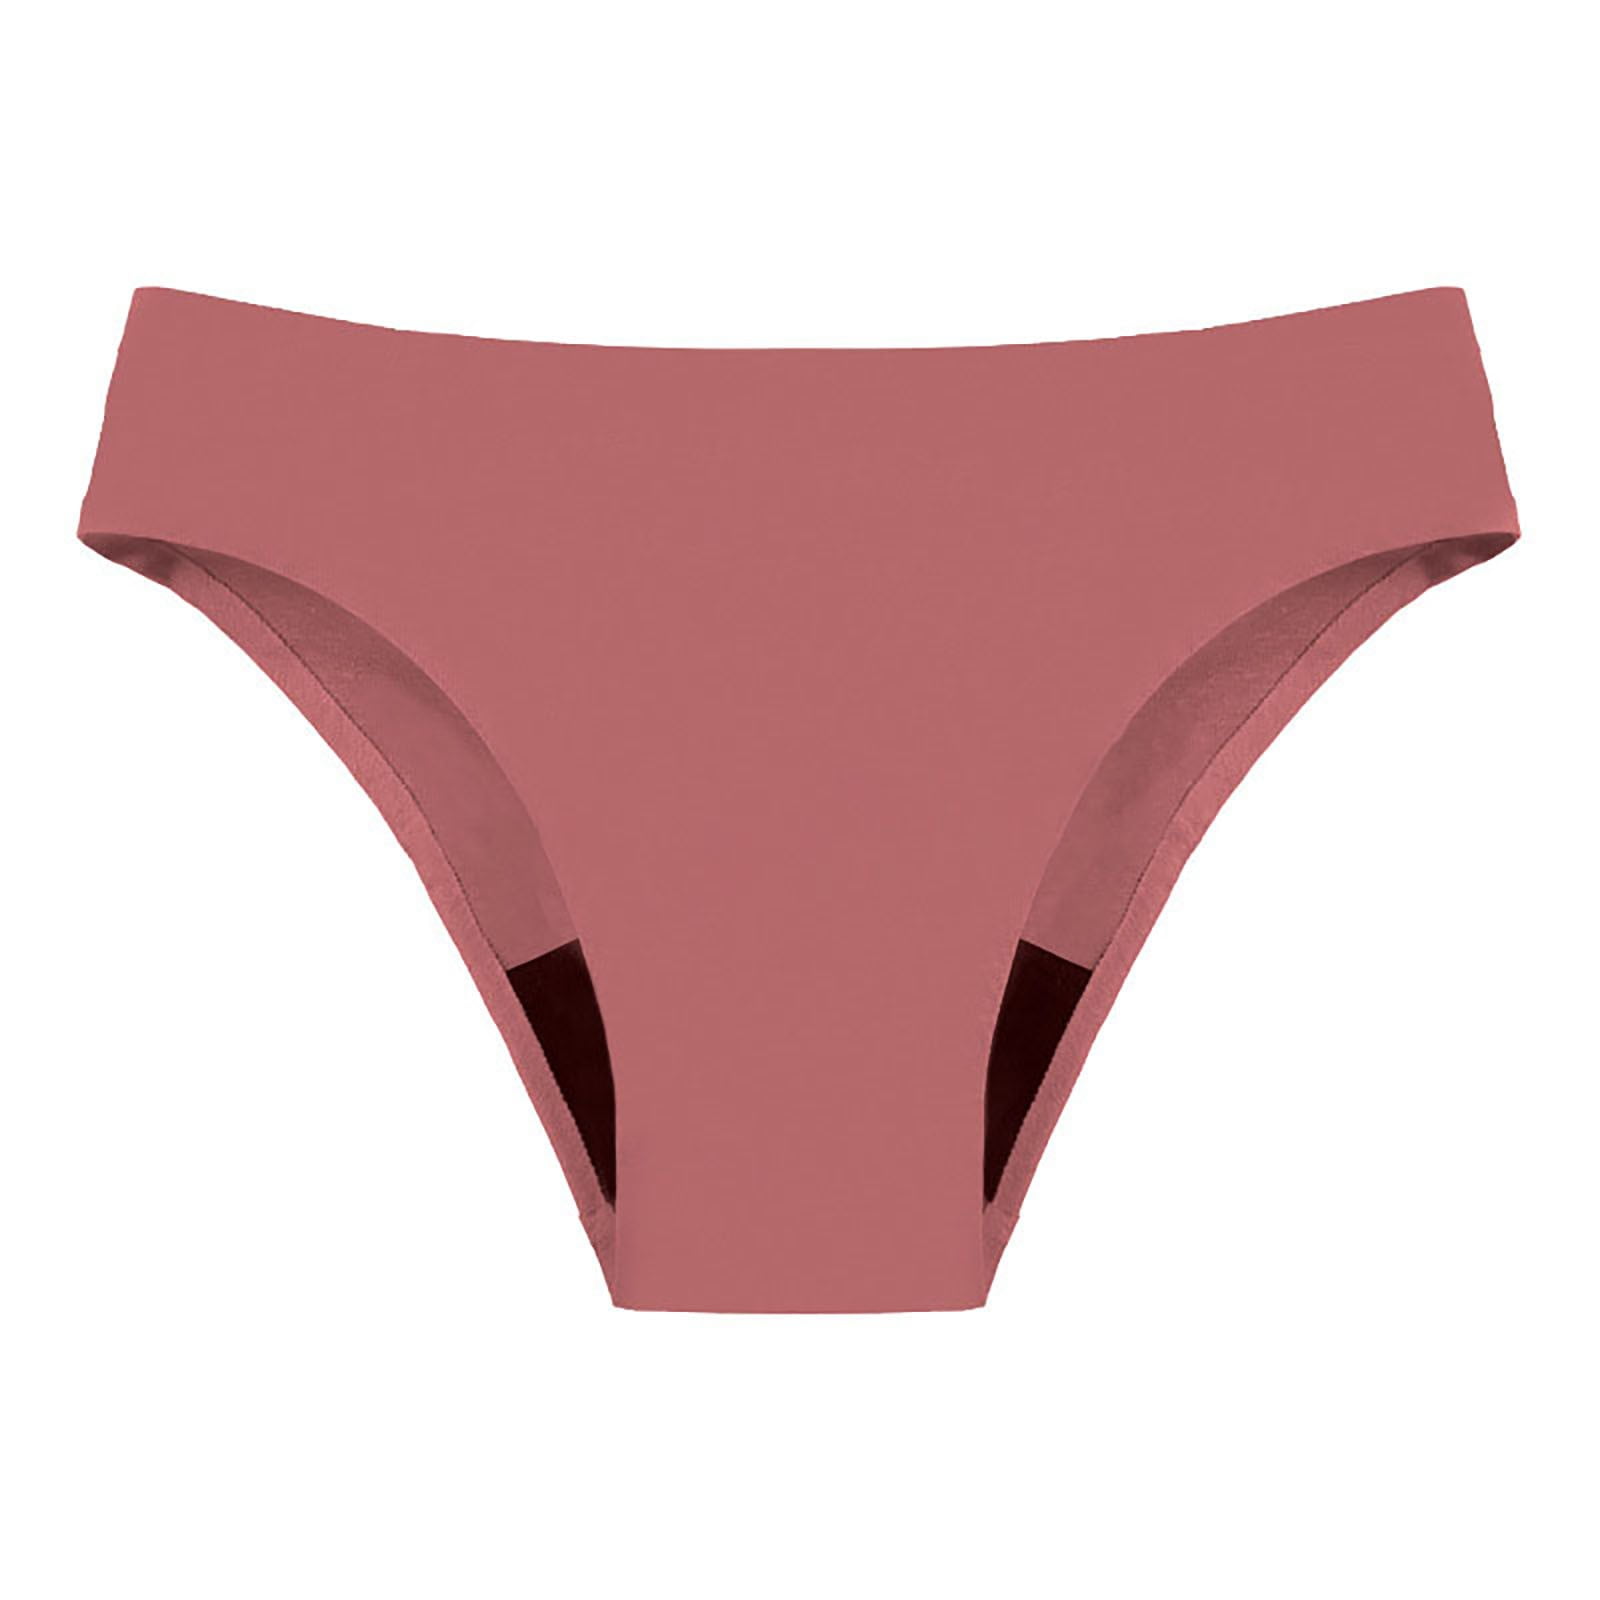 Period Swimwear Menstrual Leakproof Bikini Bottom Absorbent Pants High  Waist Swimming Trunks for Teenagers Women,Light Brown XS 